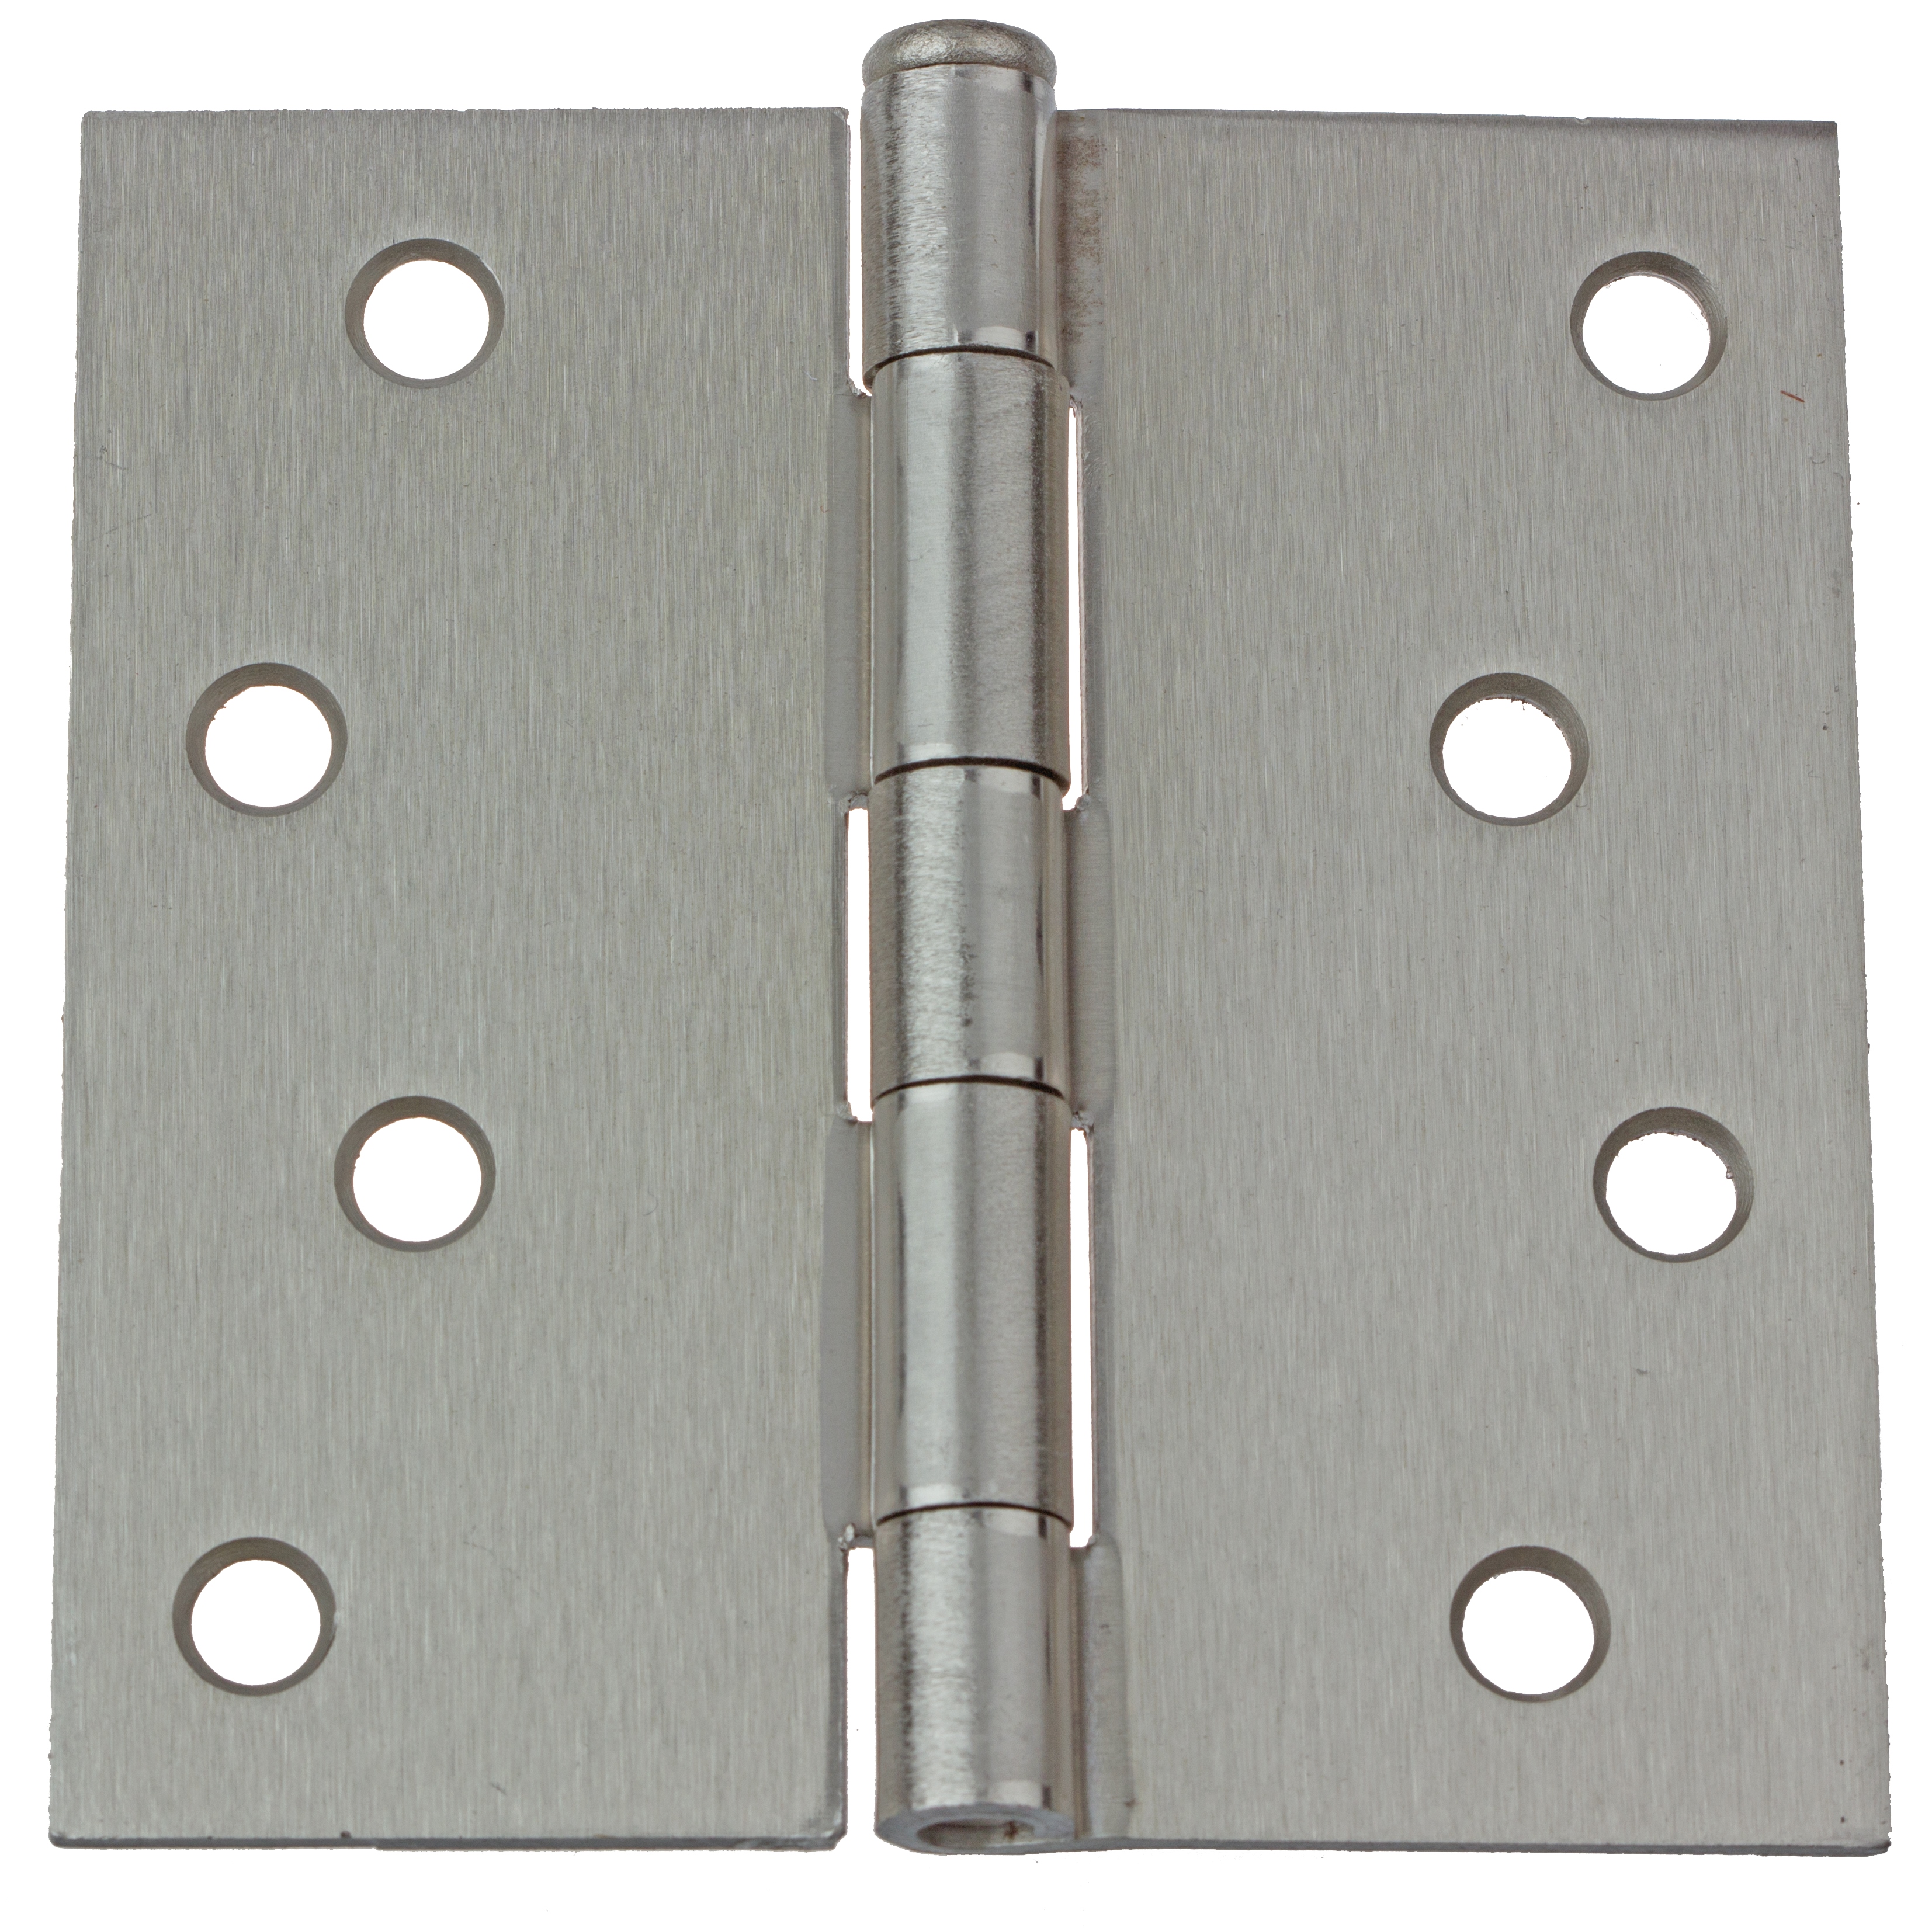 GlideRite 4 in. Steel Door Hinge with Square Corner Radius, Satin Nickel finish, Pack of 12 - image 1 of 3